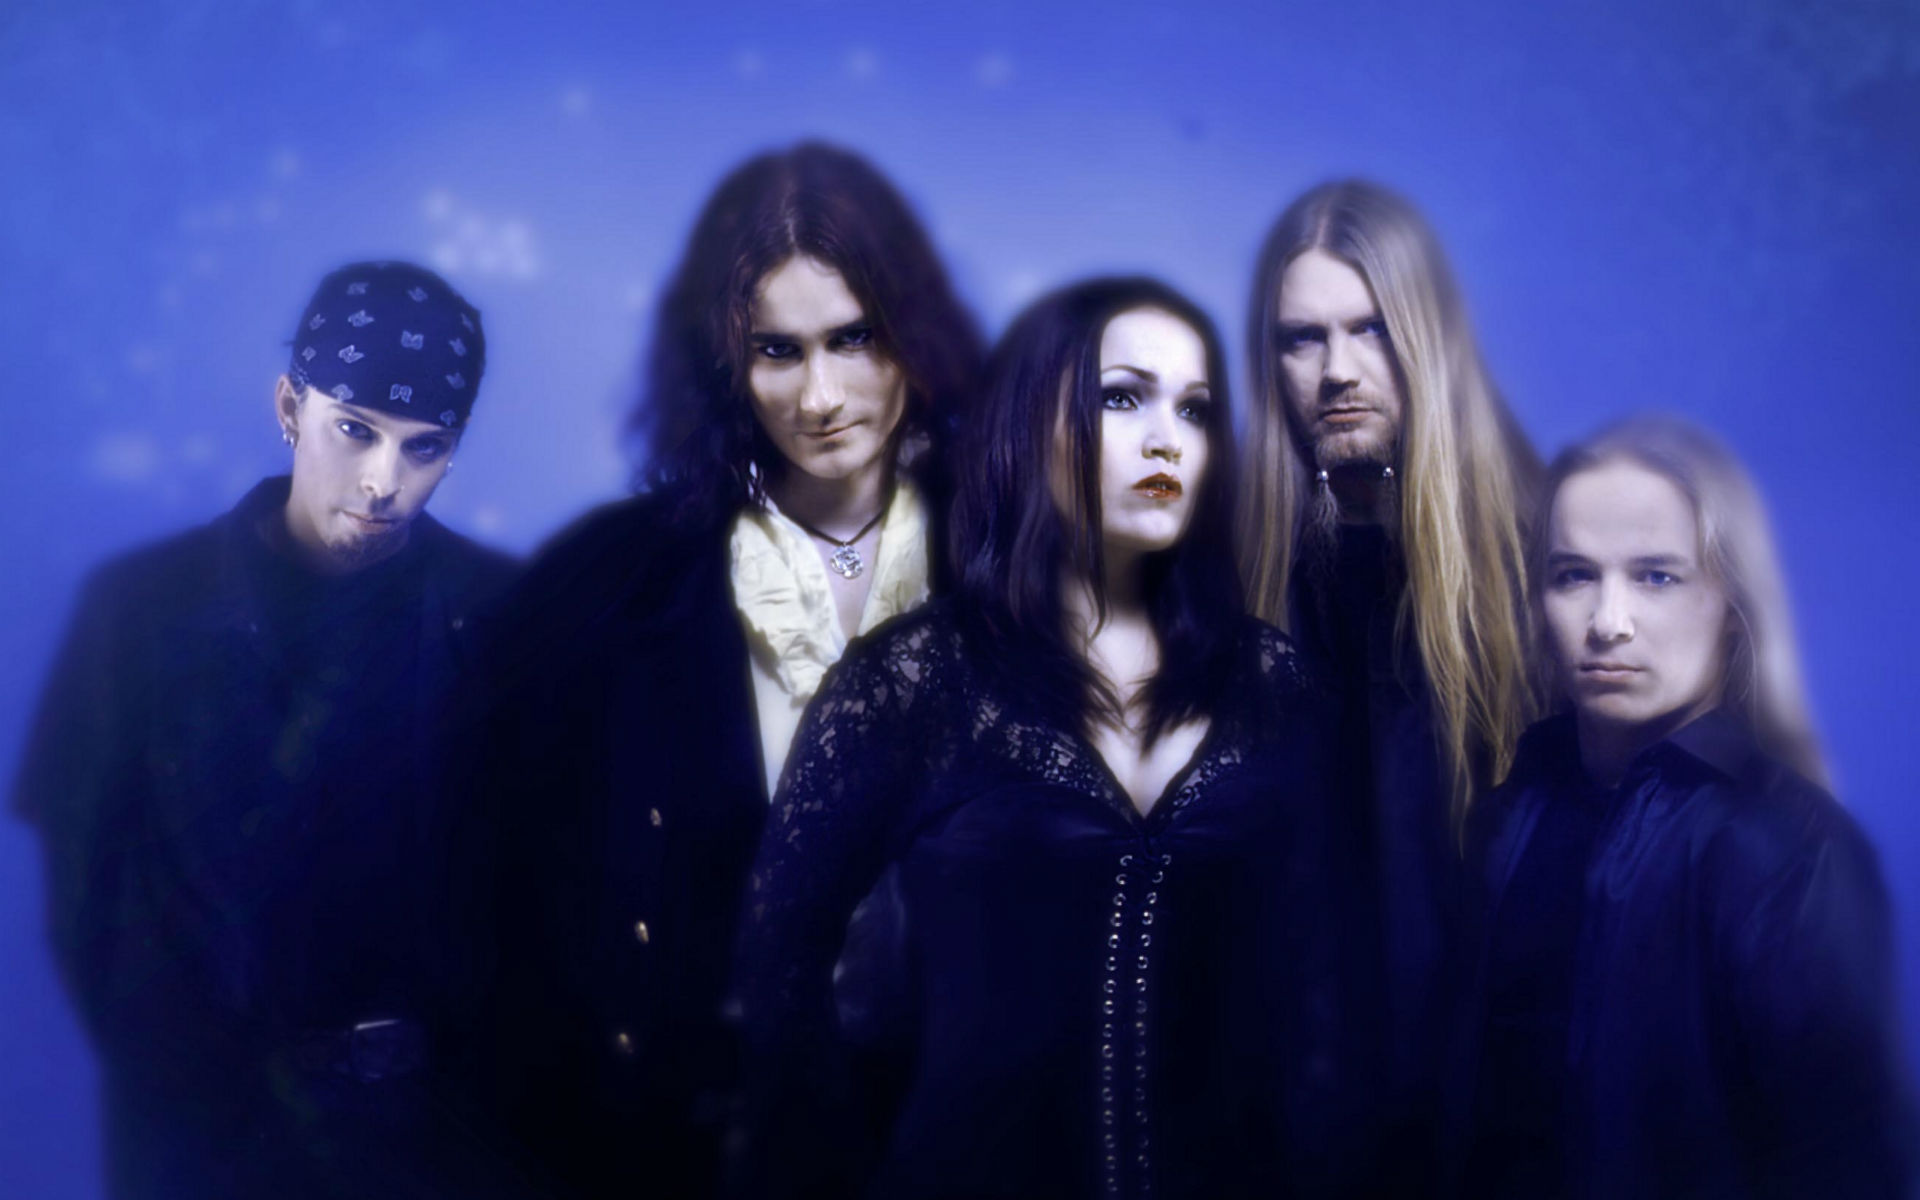 Nightwish Wallpaper Background Image